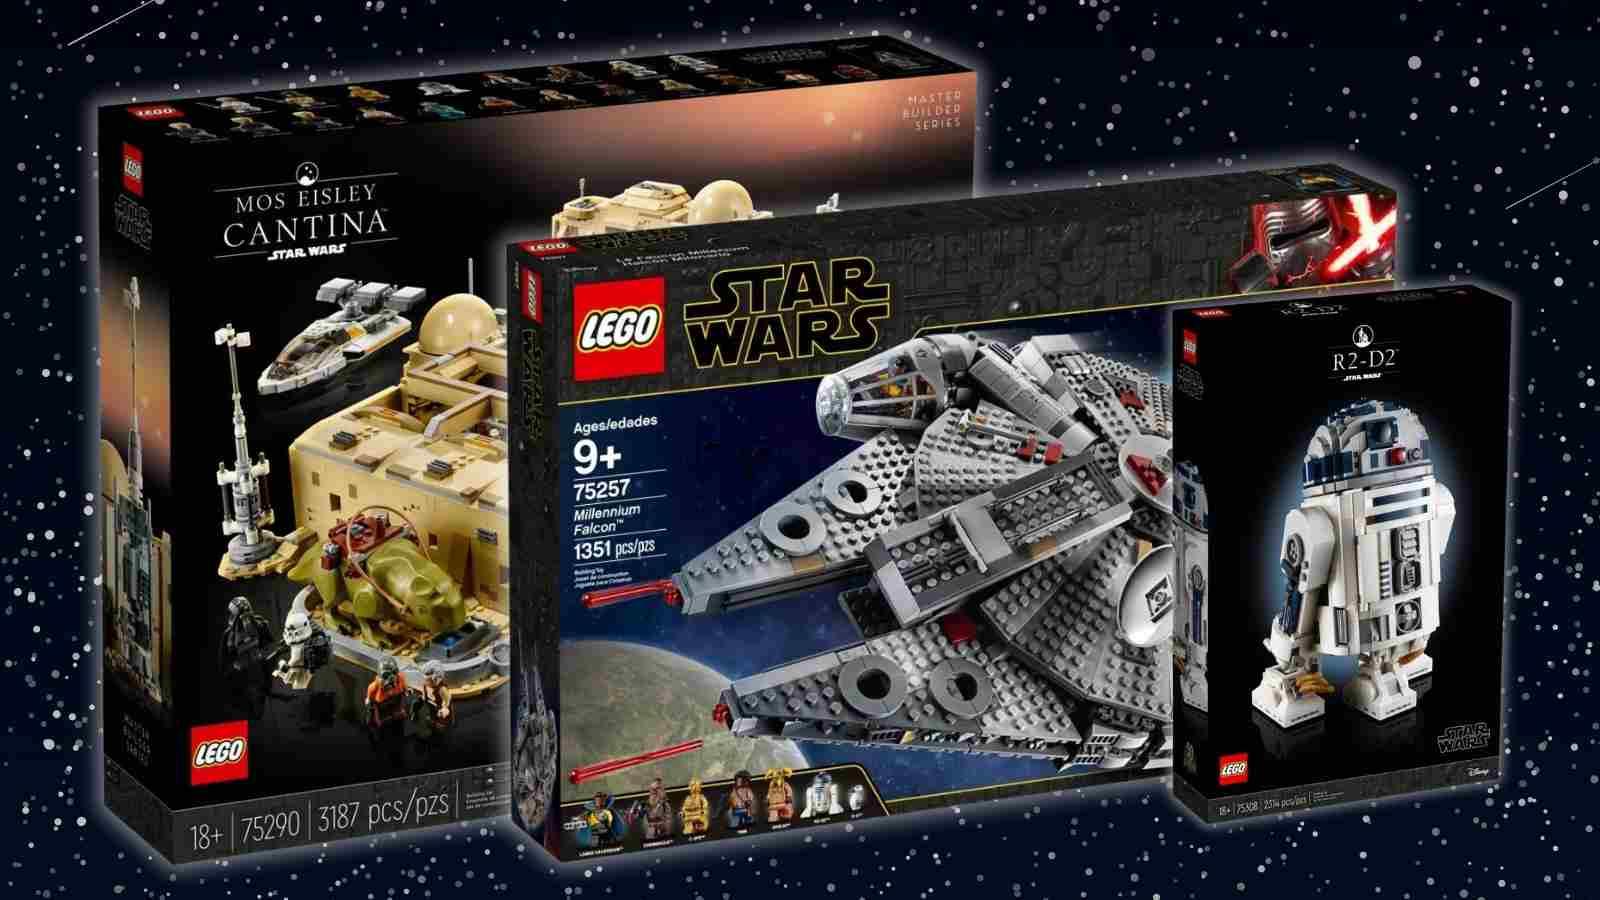 Three of the retiring LEGO Star Wars sets on a galaxy background